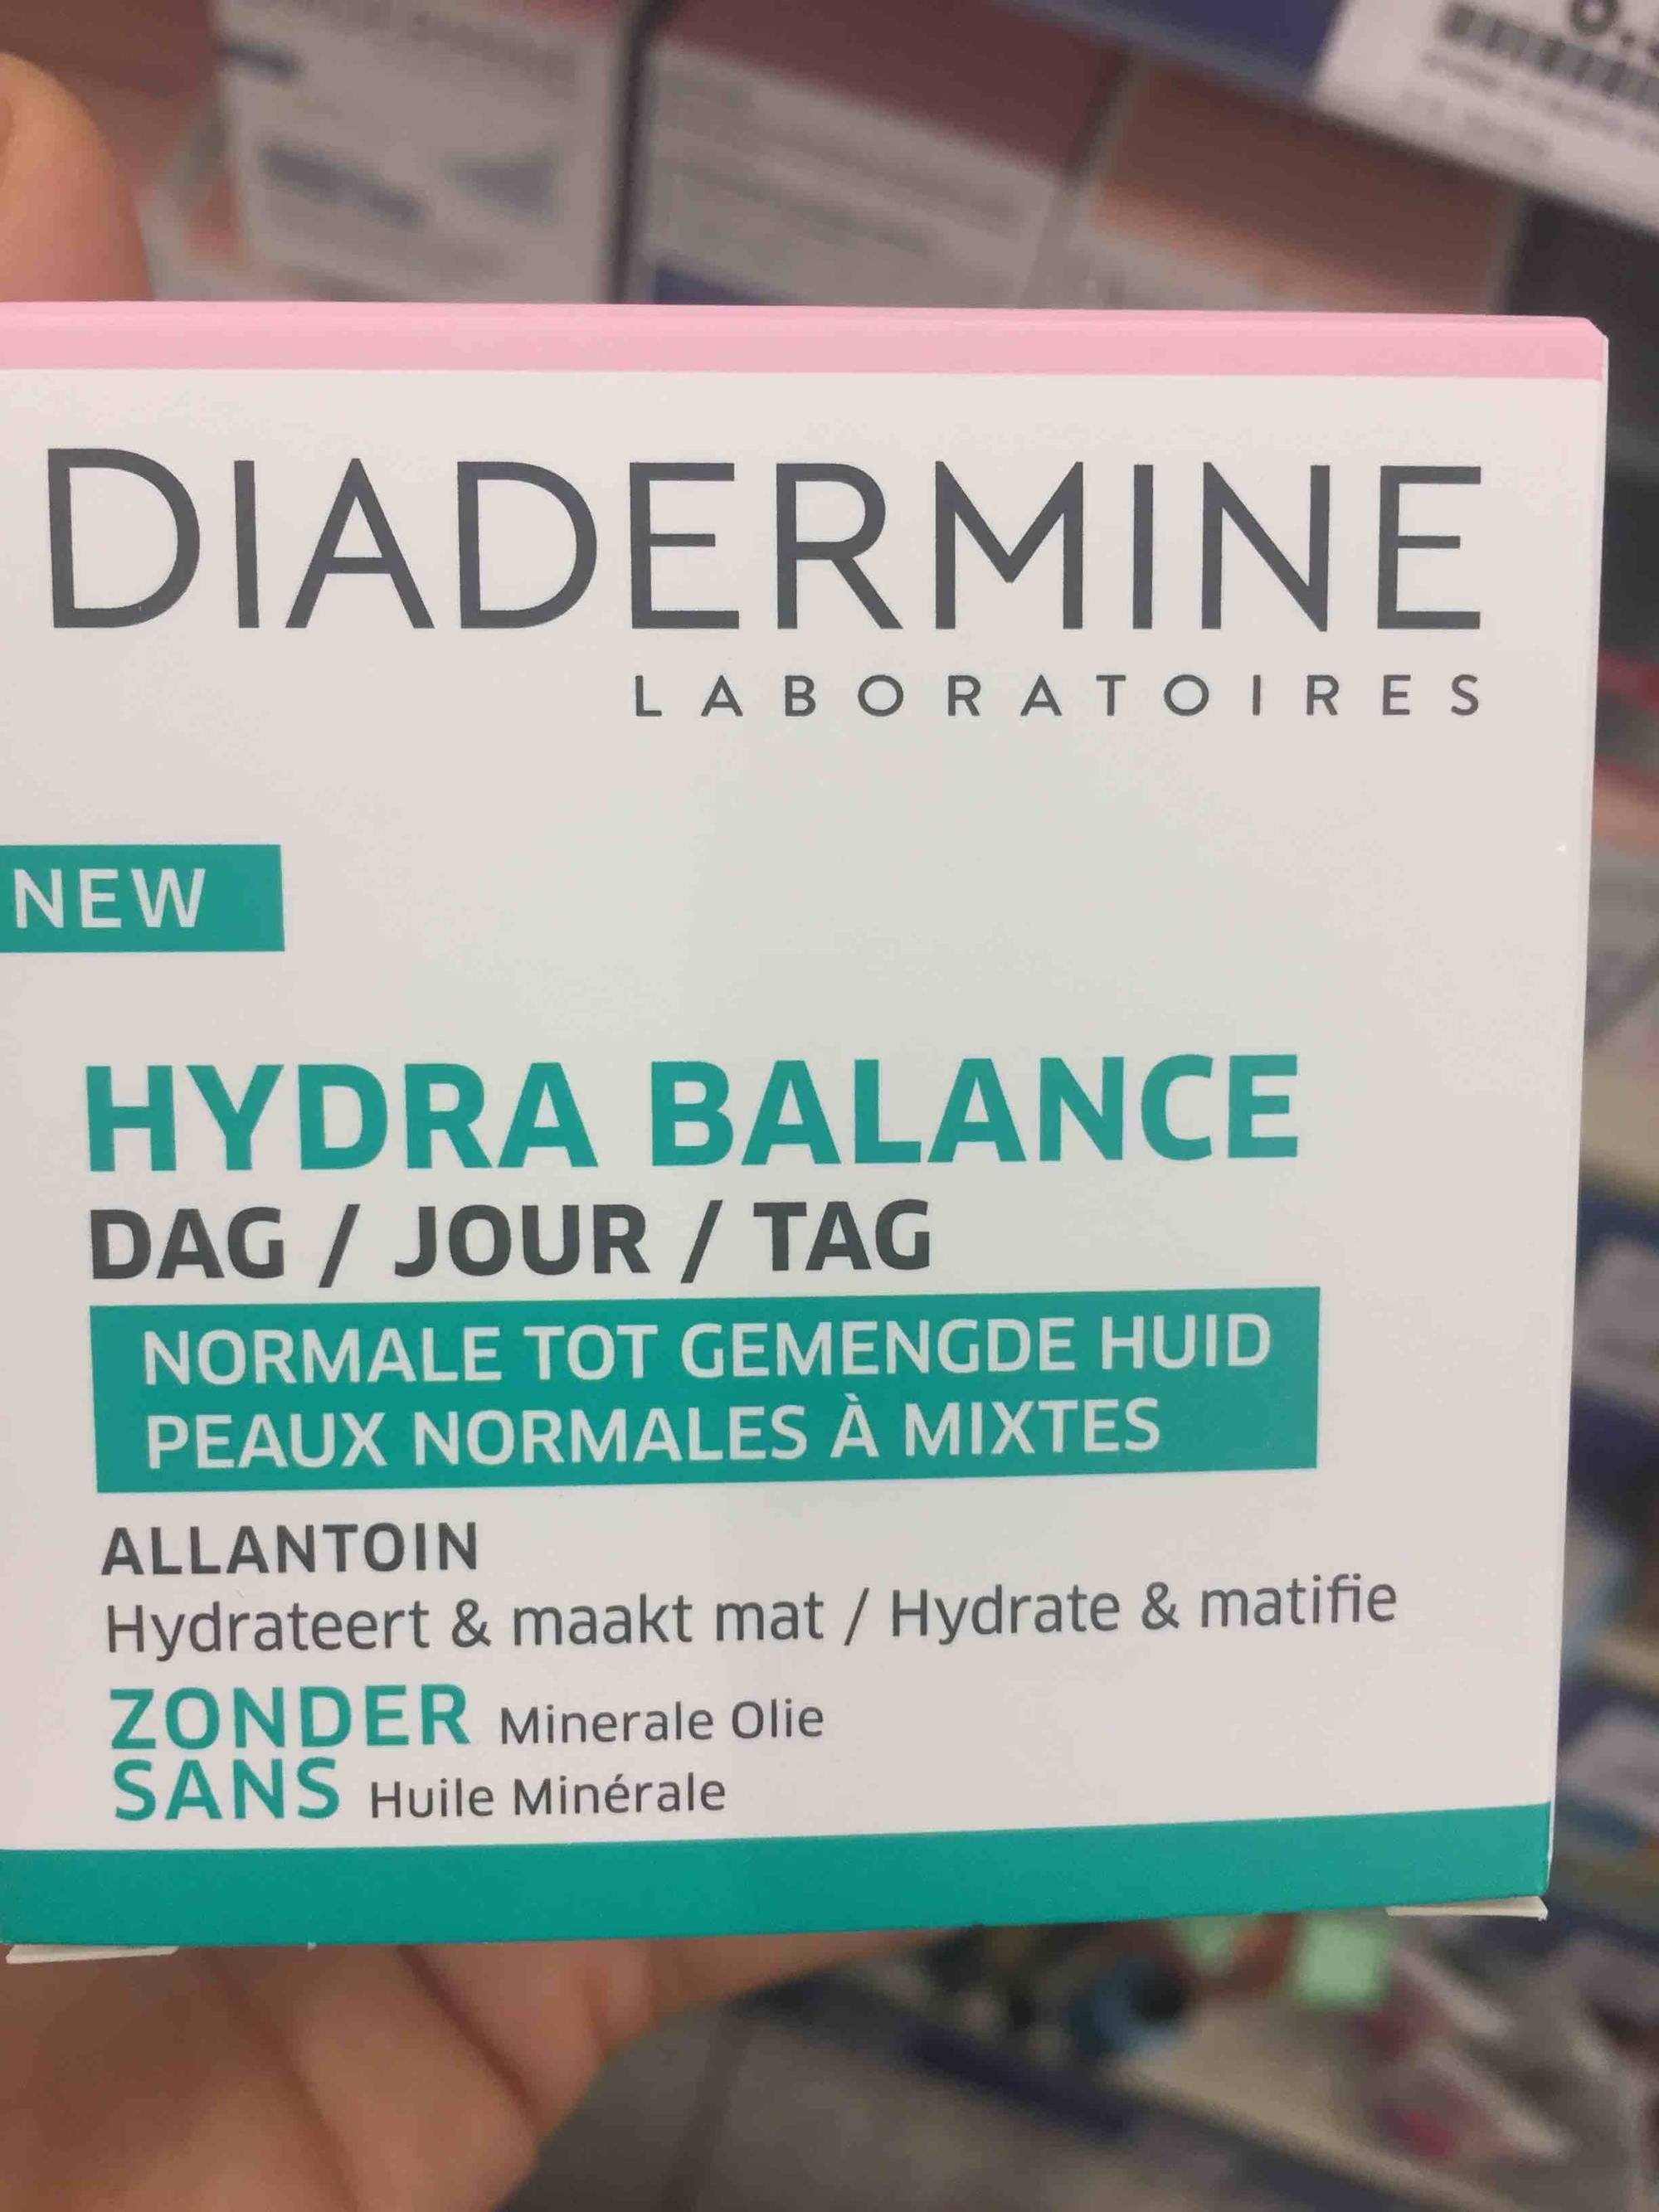 DIADERMINE - Hydra balance - Hydrate & matifie